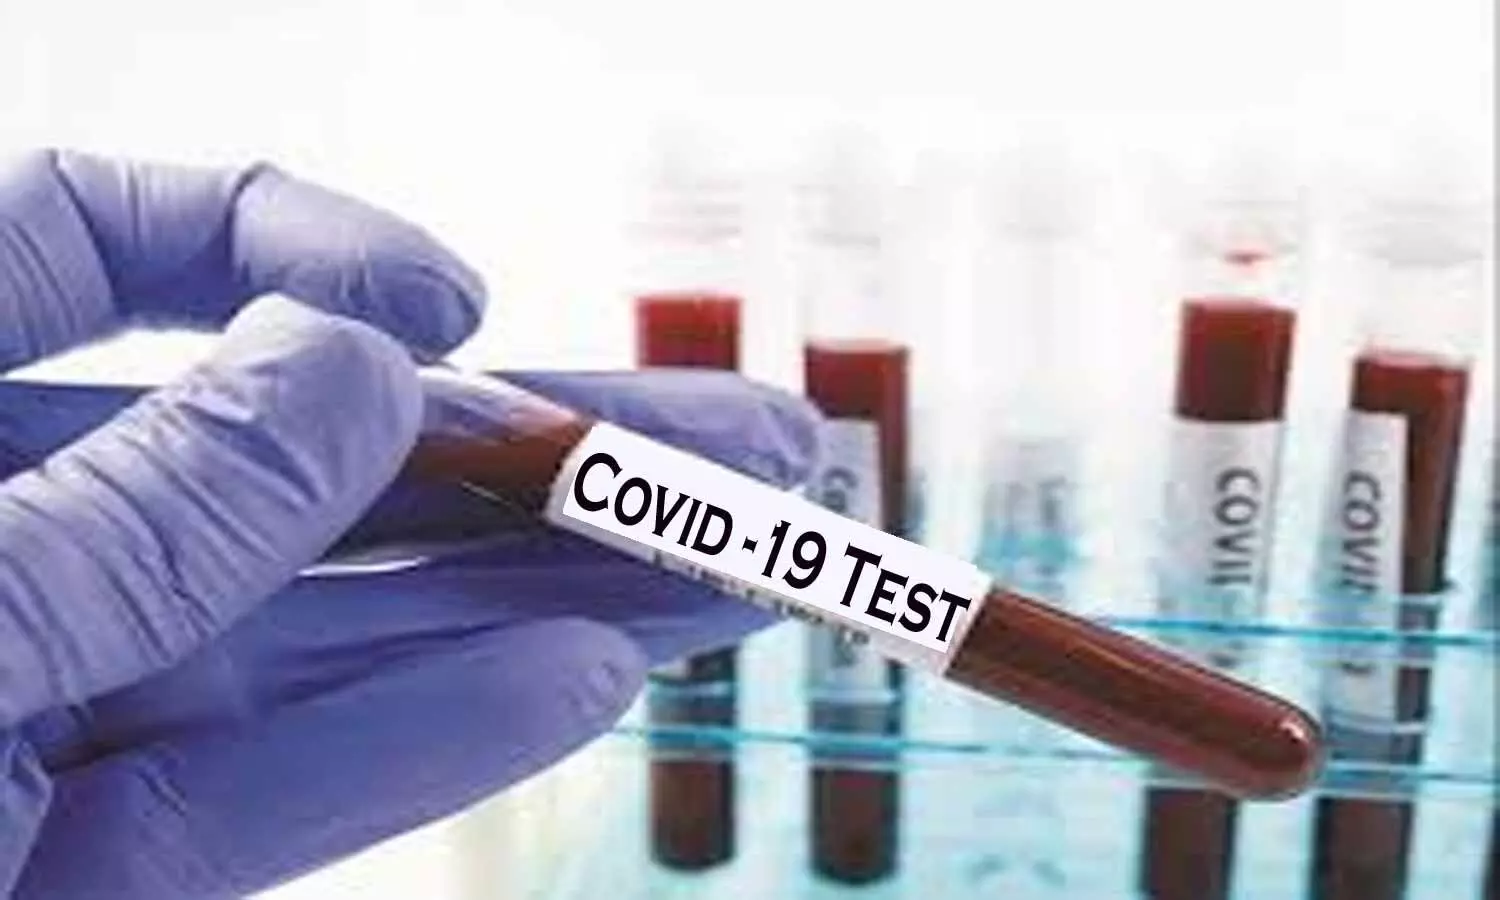 Comply with New COVID-19 testing advisory: Delhi Govt tells all hospitals, Dispensaries